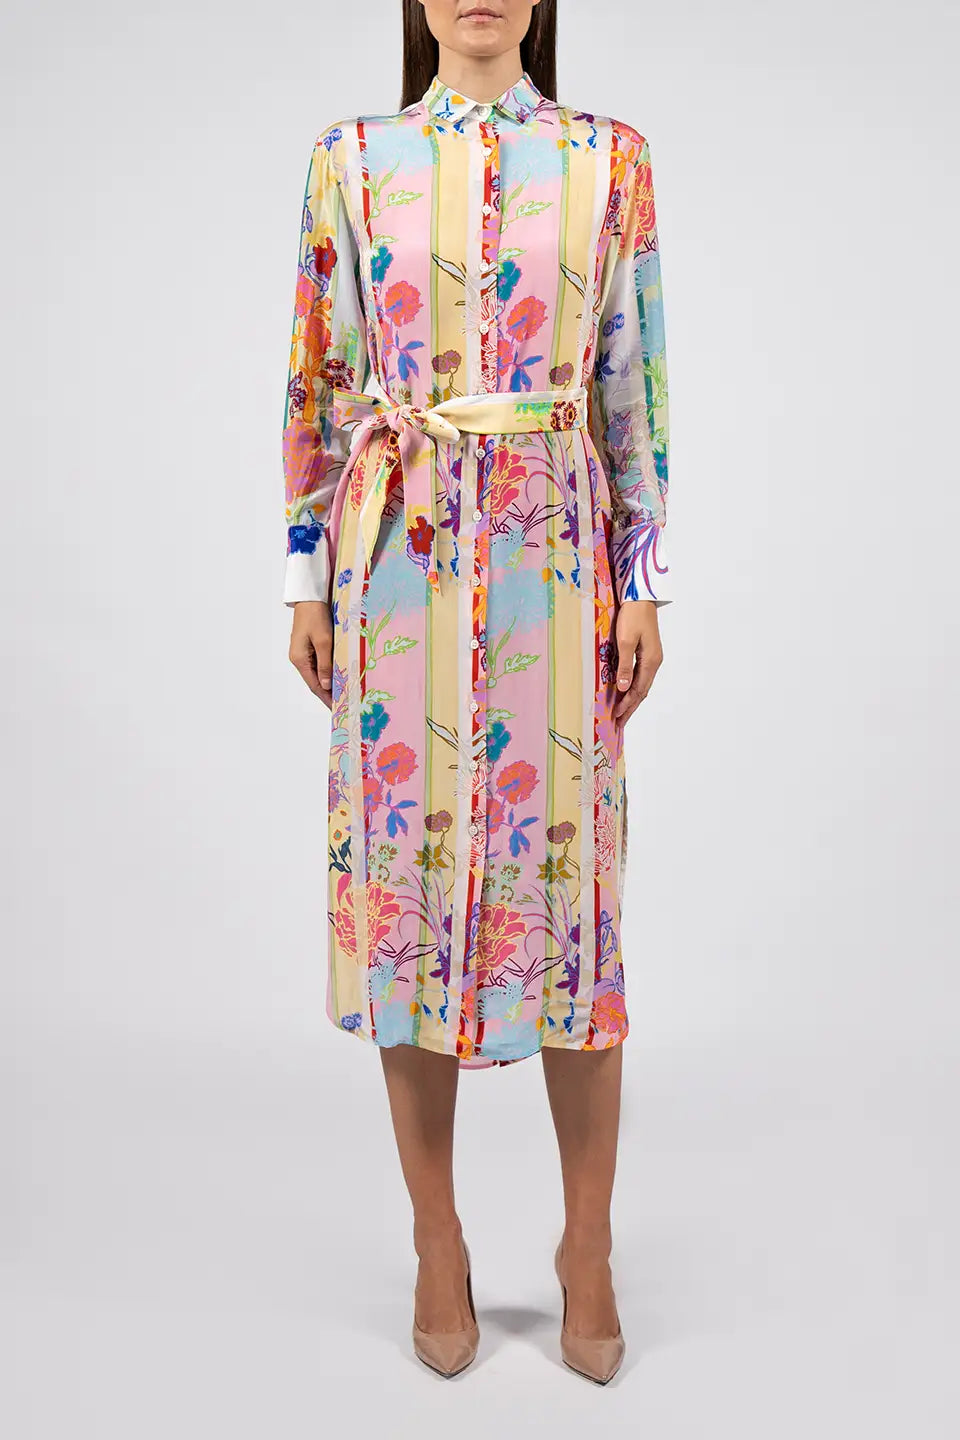 Shop online trendy Multicolor Midi dresses from Borgo de Nor Fashion designer. Product gallery 1